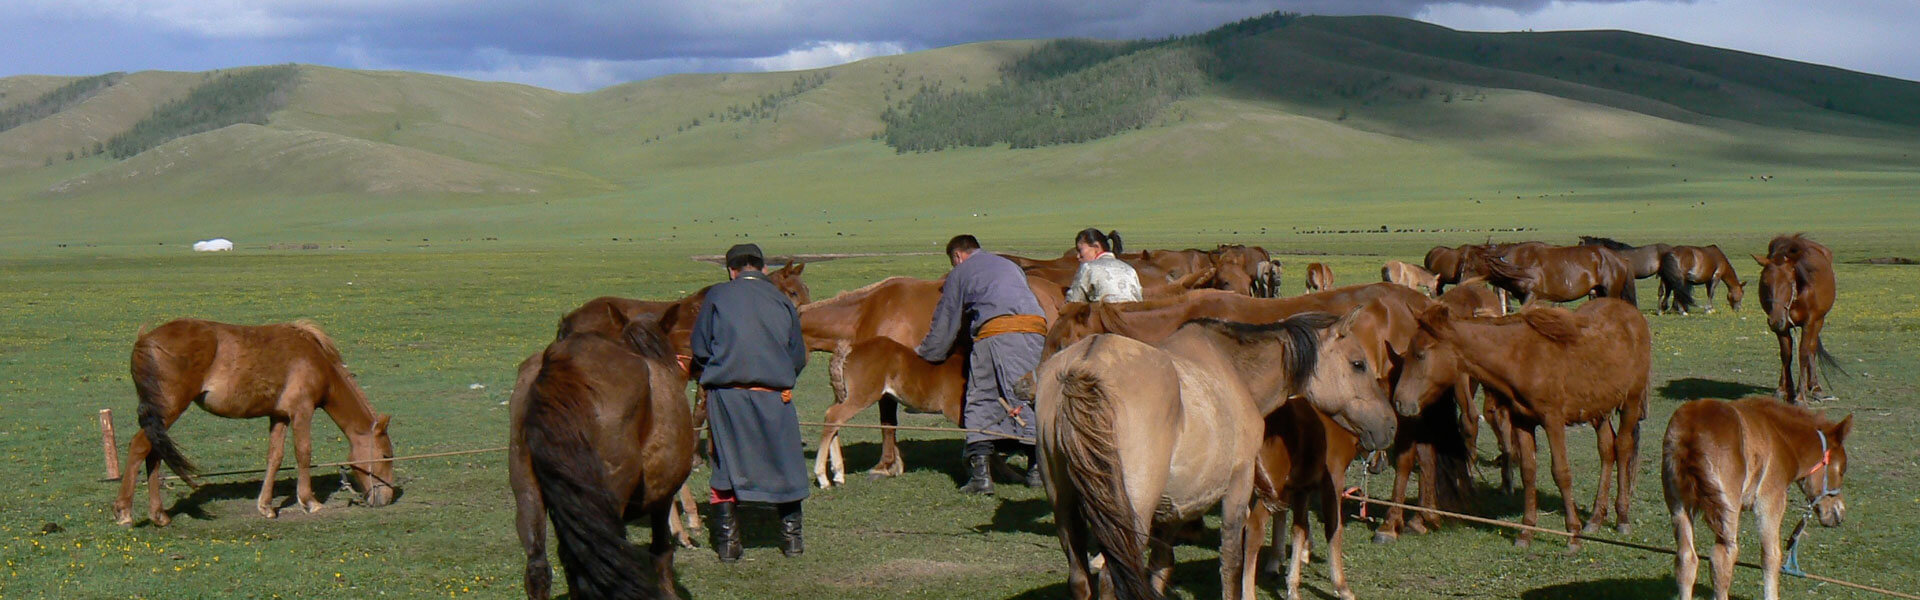 Mongolie avontuur reis